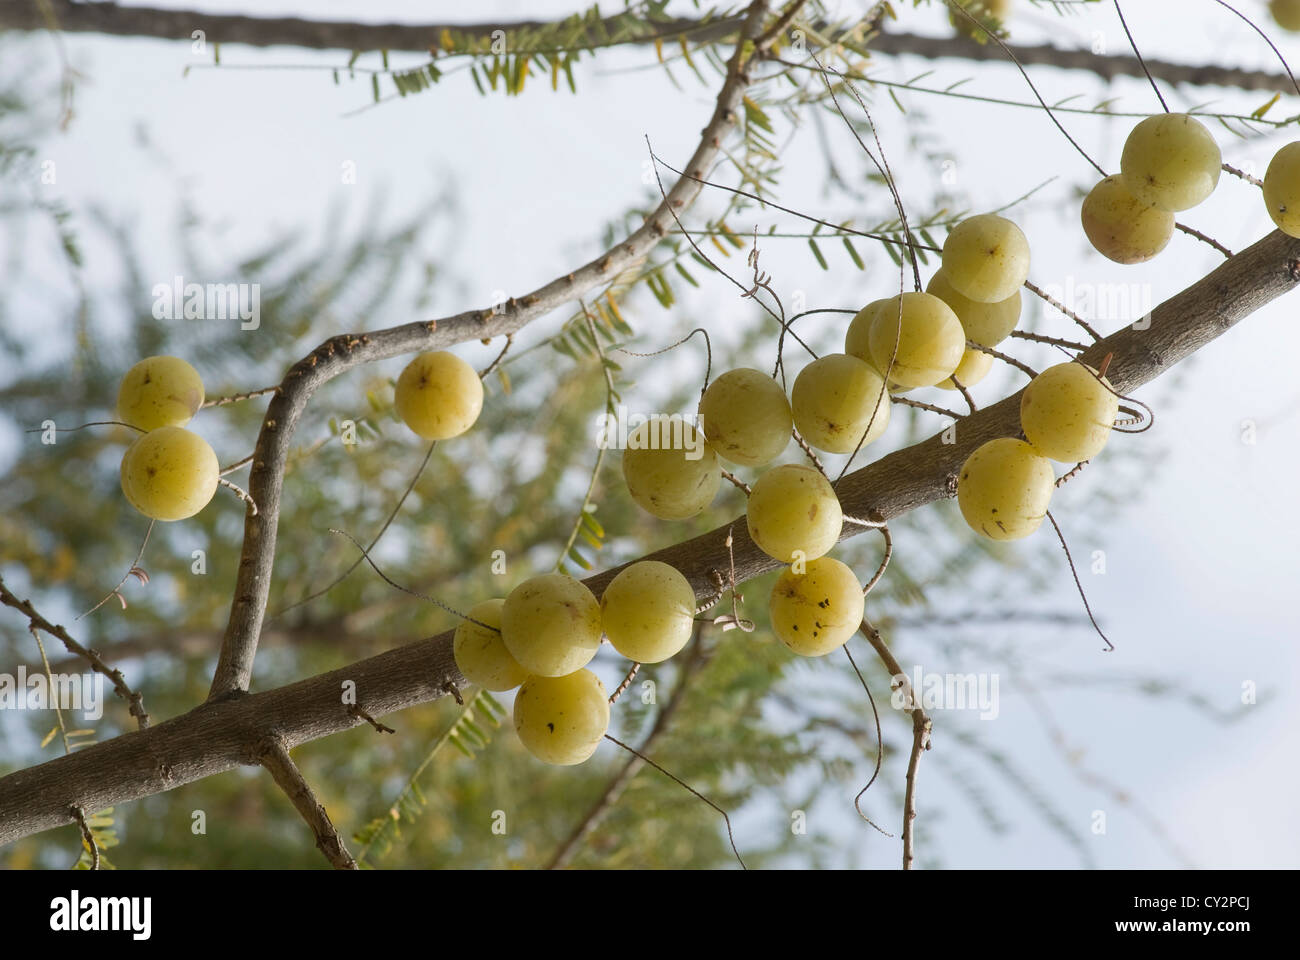 Indian gooseberry; Emblica officinalis or Phyllanthus emblica L,Tamil Nadu,India. Stock Photo